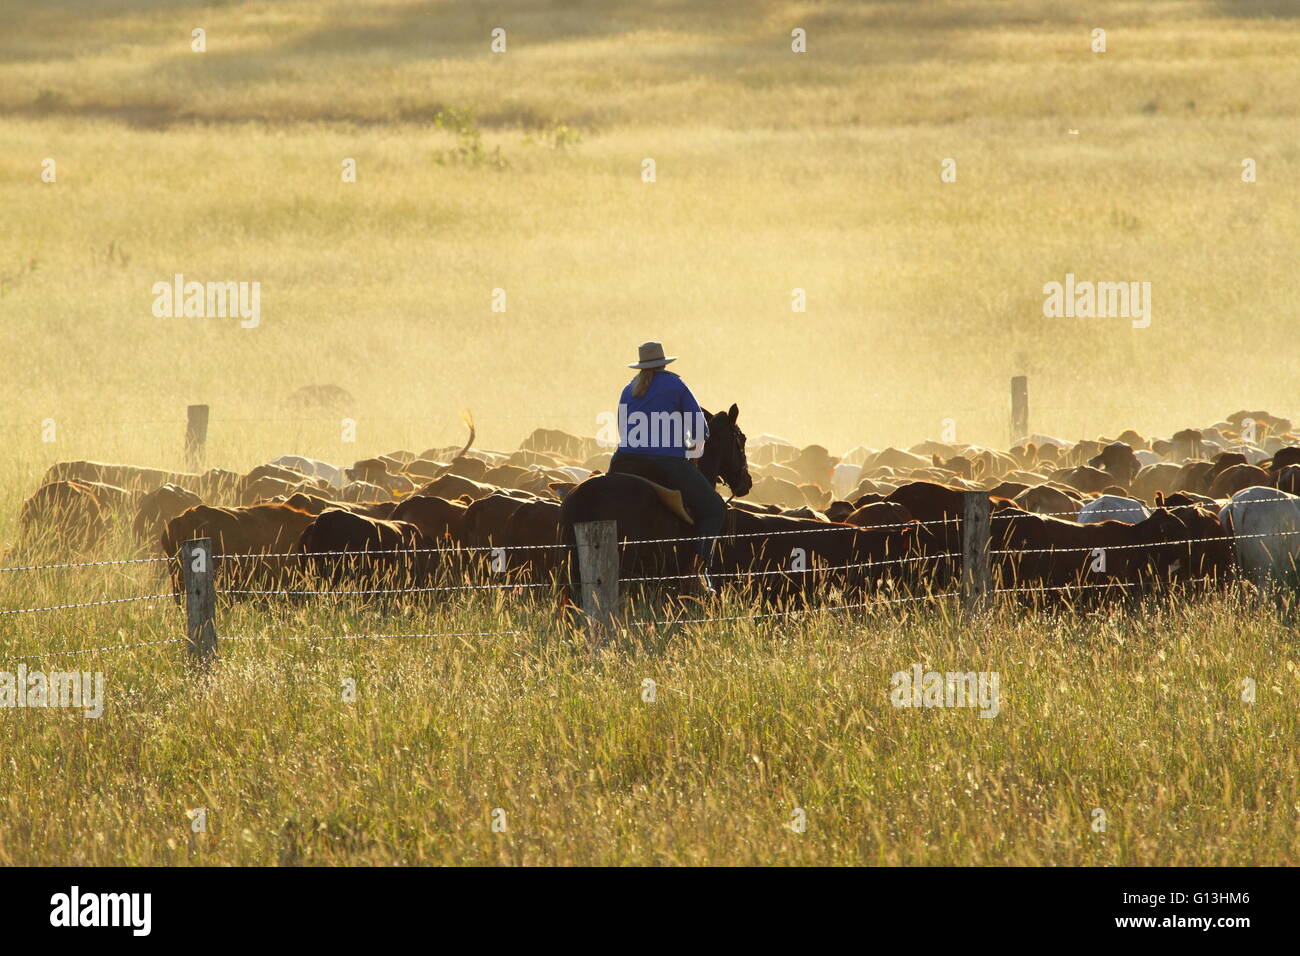 Un drover femmina nel suo ventenne tendendo una folla di capi di bestiame nei pressi di Eidsvold, Queensland, Australia durante una unità di bestiame. Foto Stock